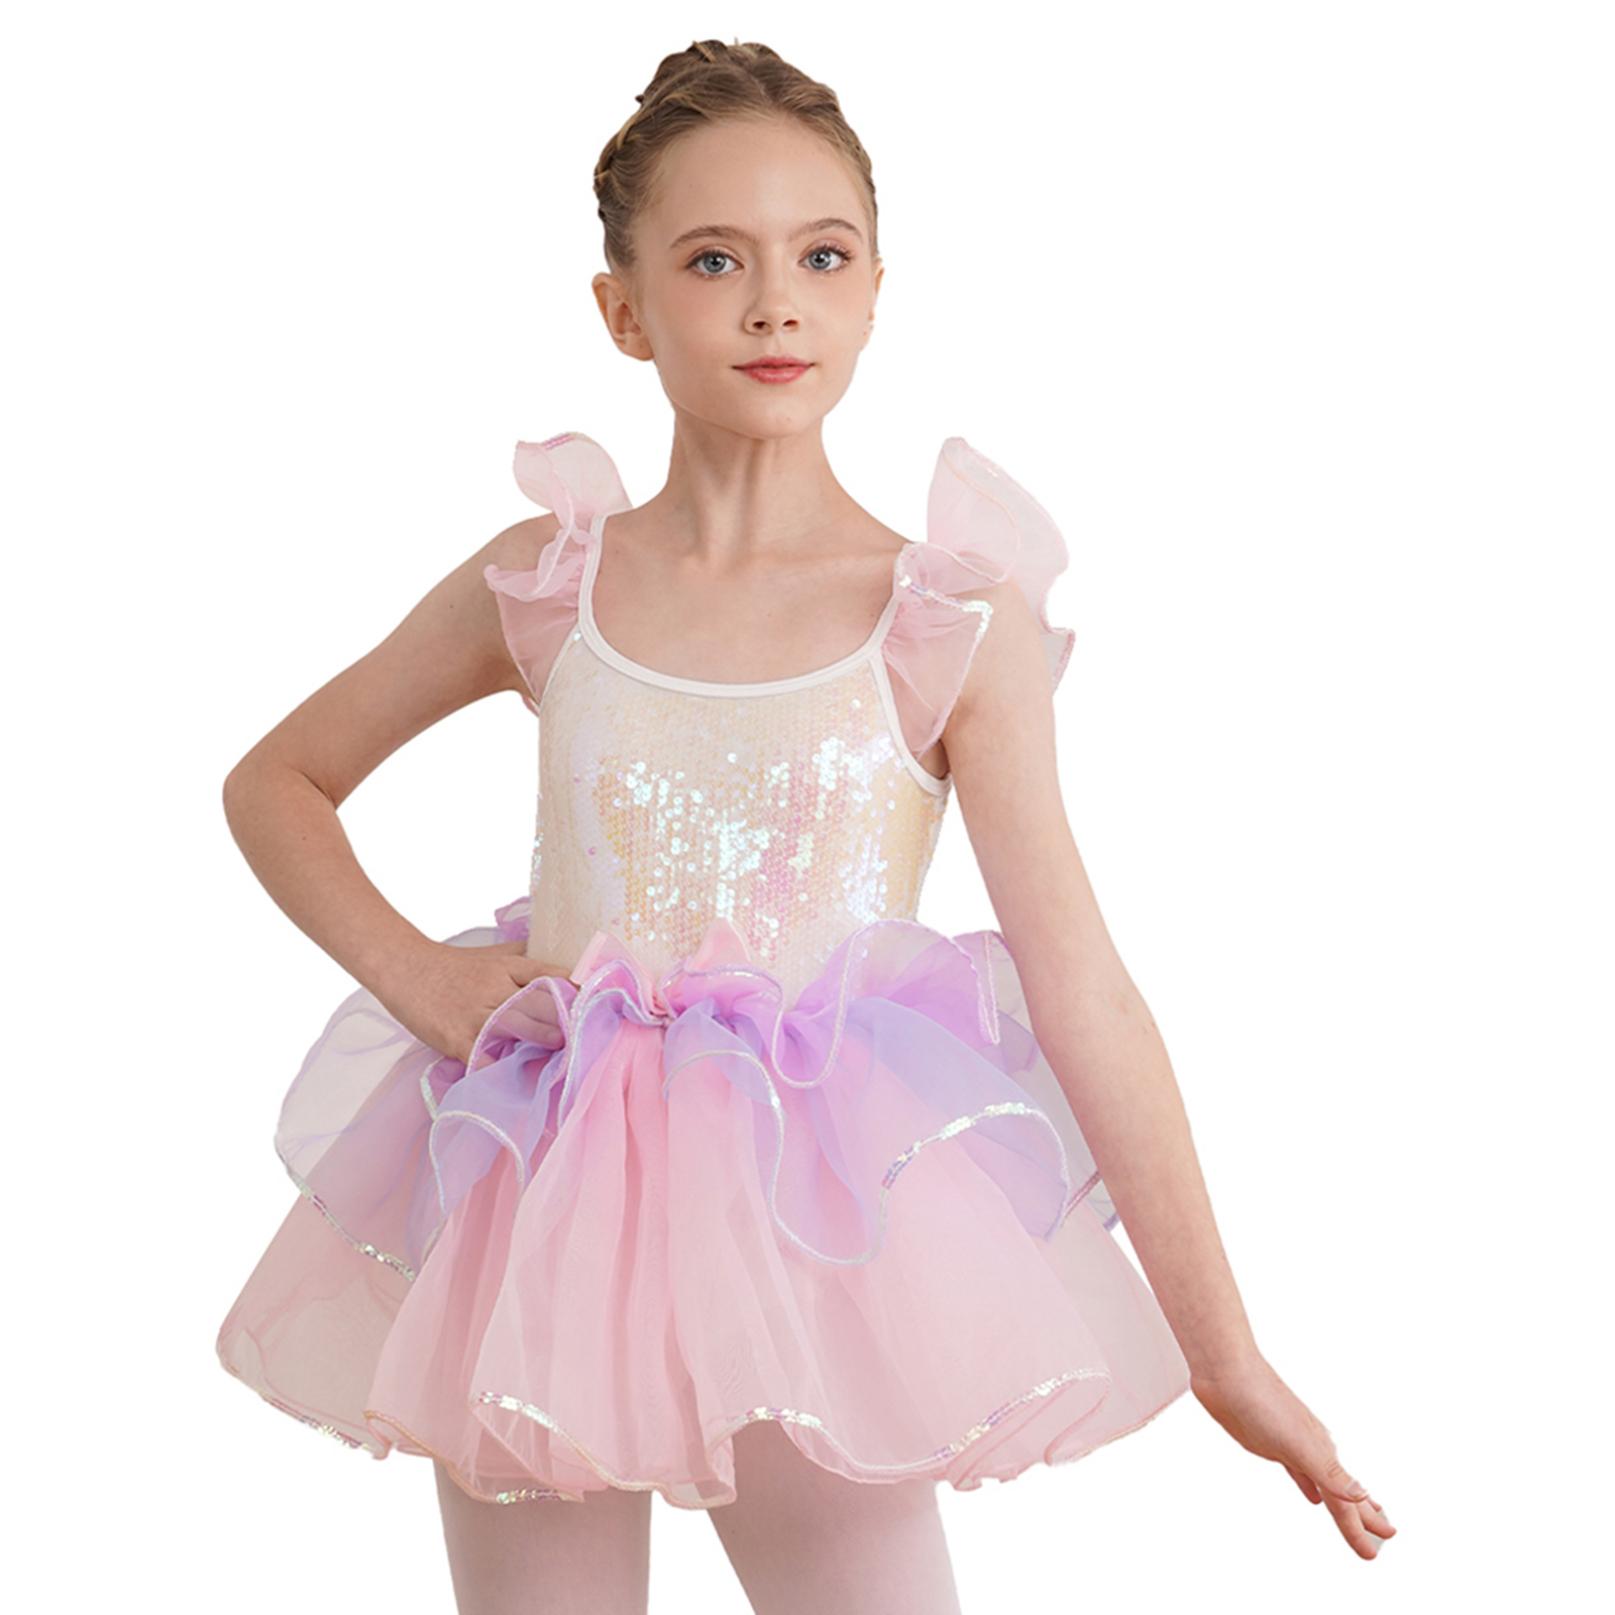 Inhzoy Kids Girls Sleeveless Shiny Sequins Tutu Dress Ballet Dance Leotard Ballerina Costume Dancewear